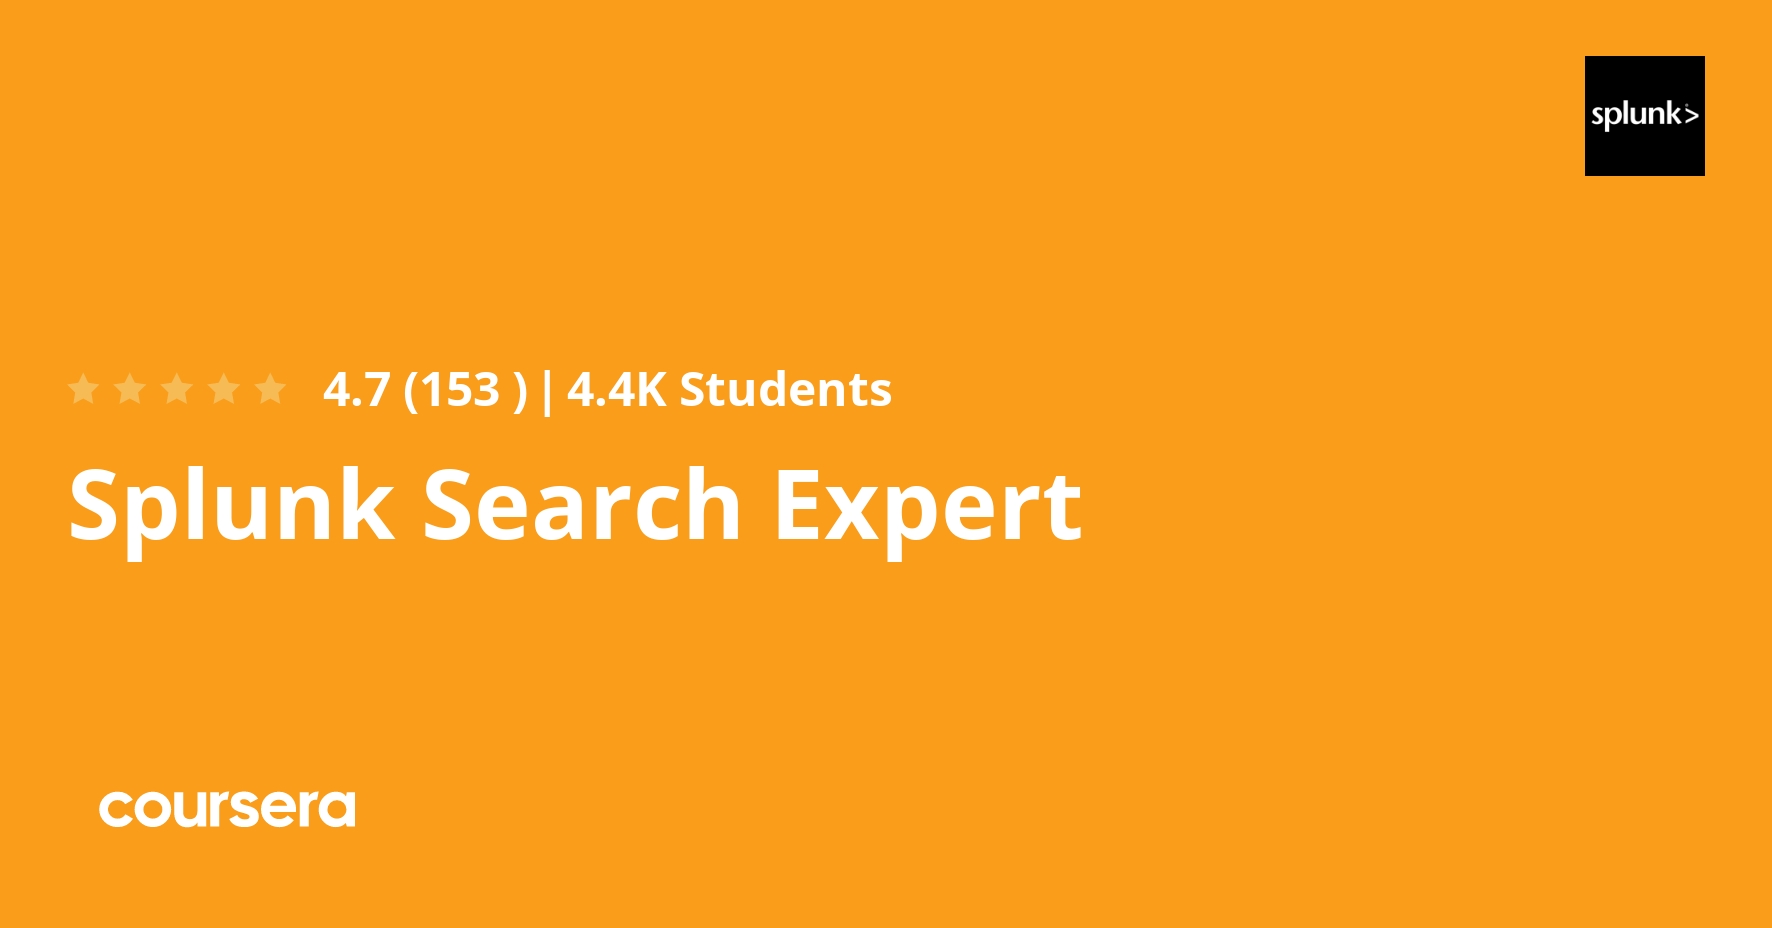 splunk-search-expert